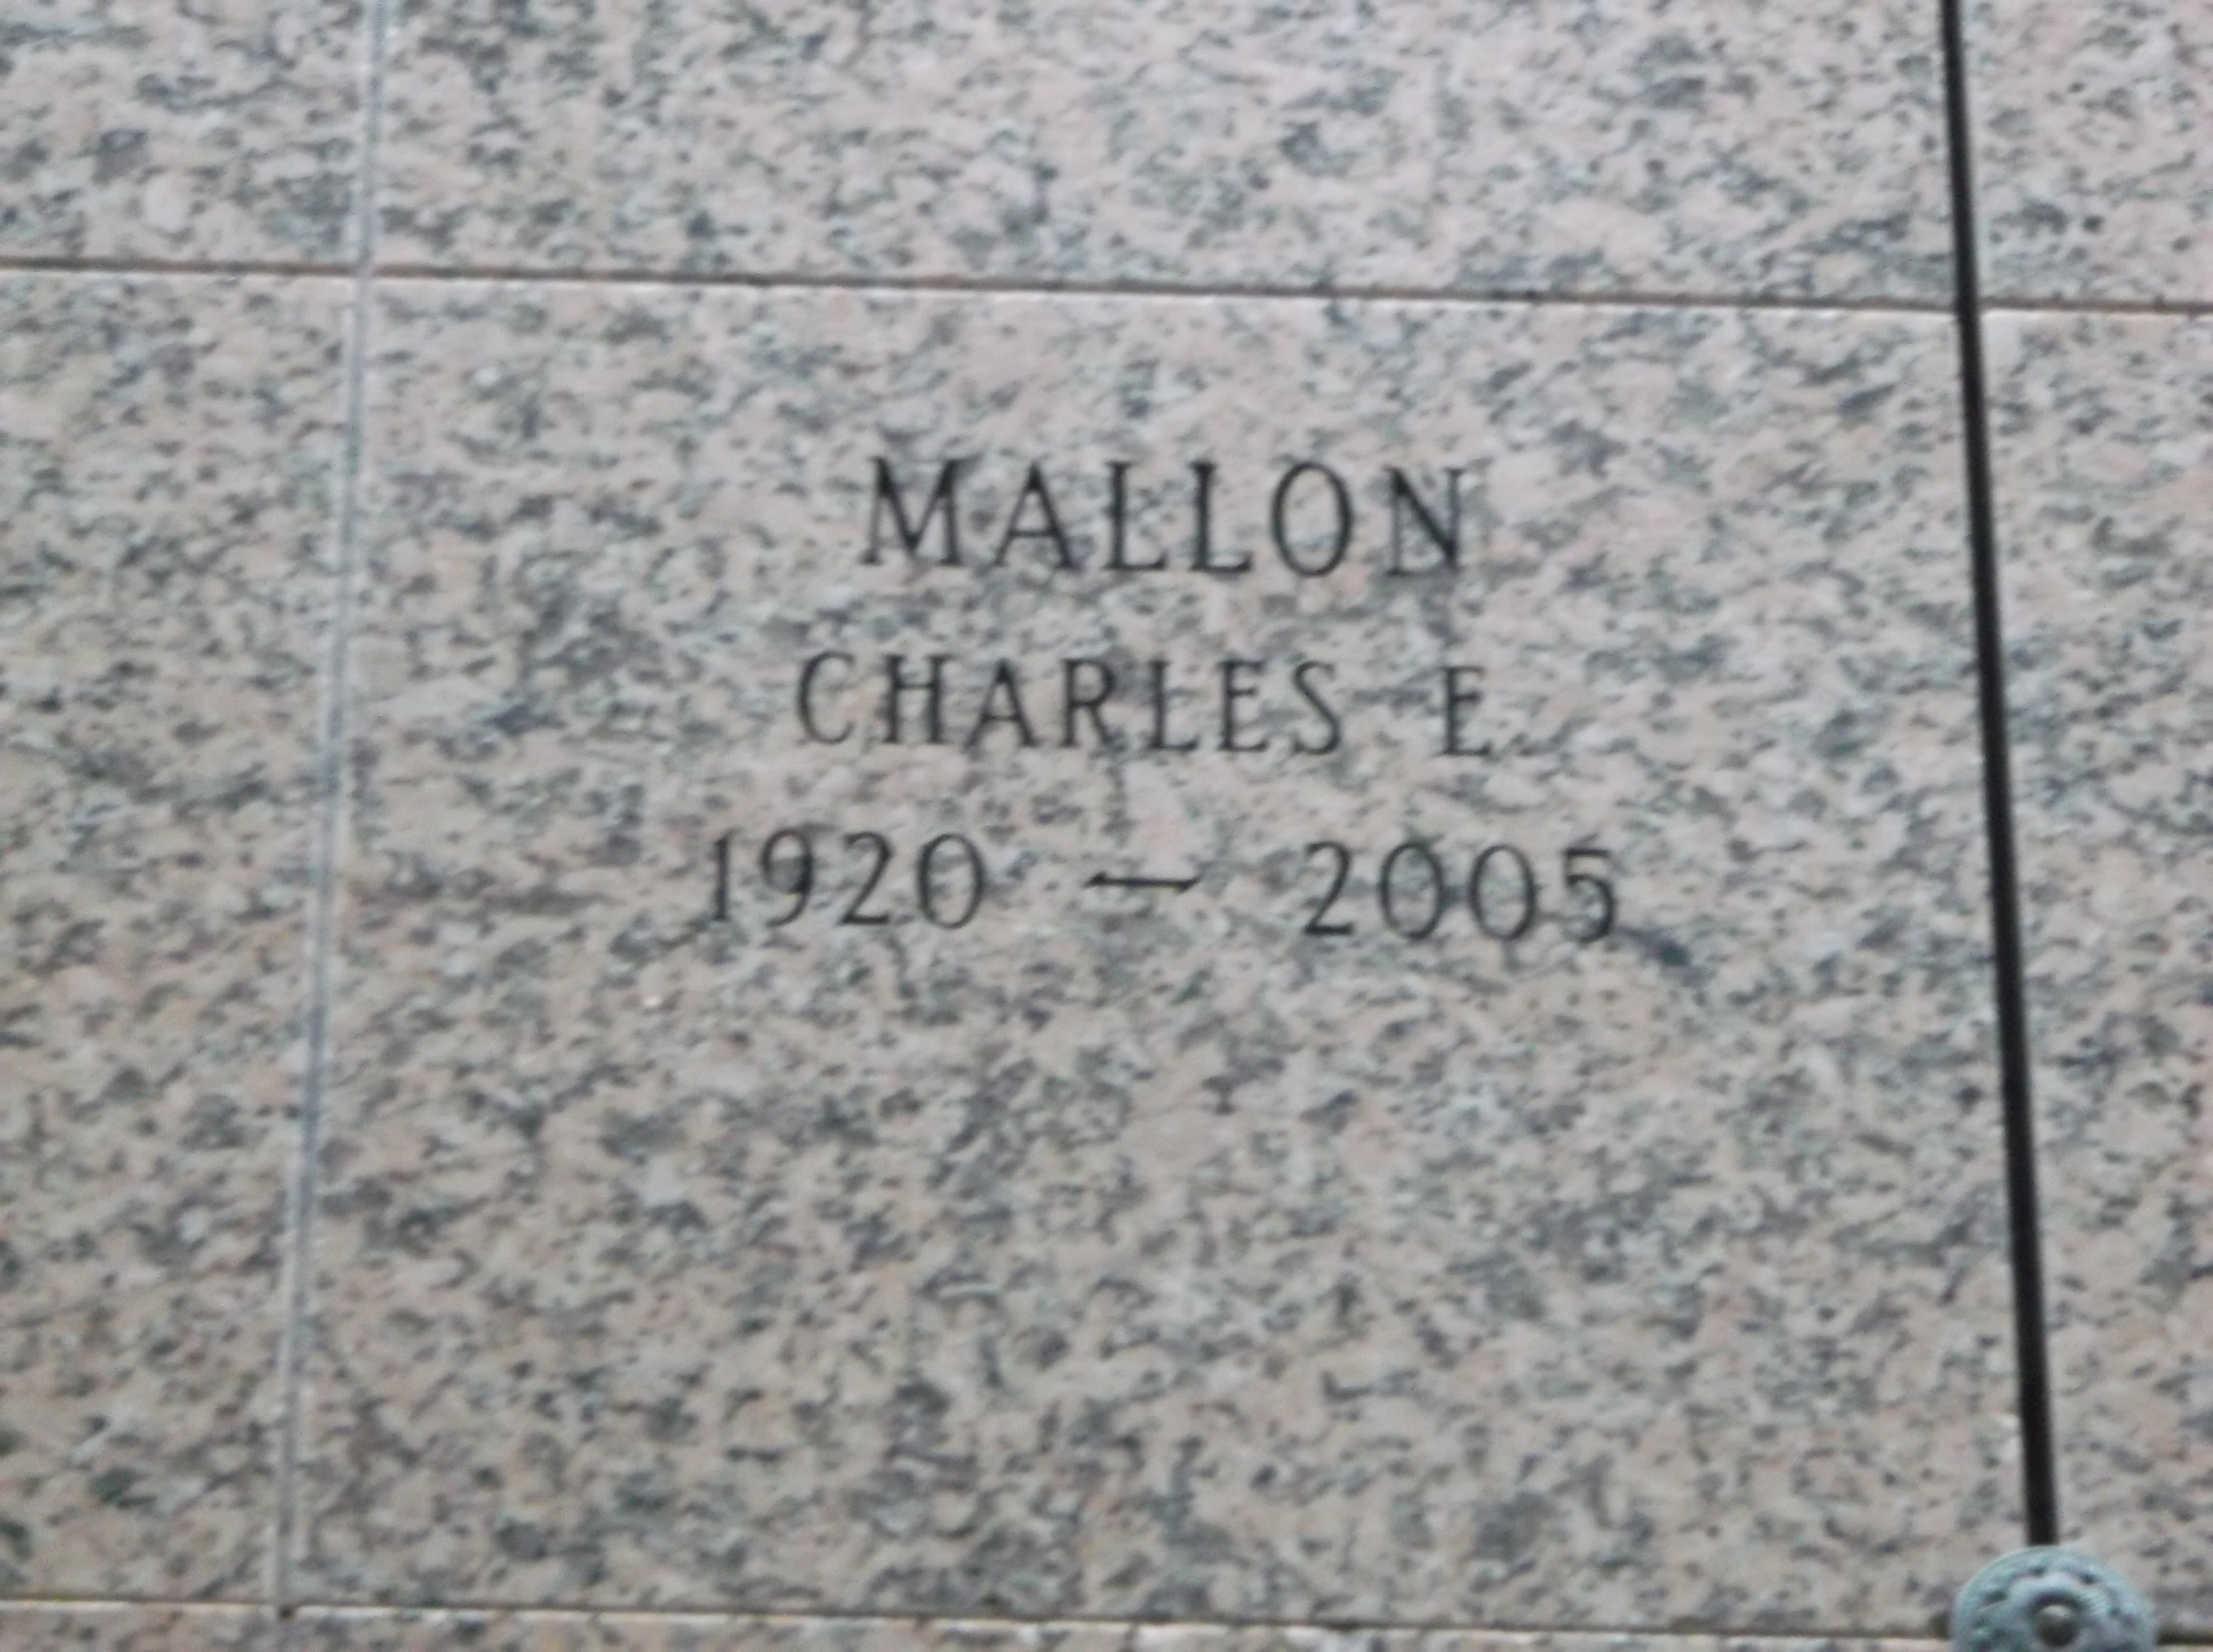 Charles F Mallon